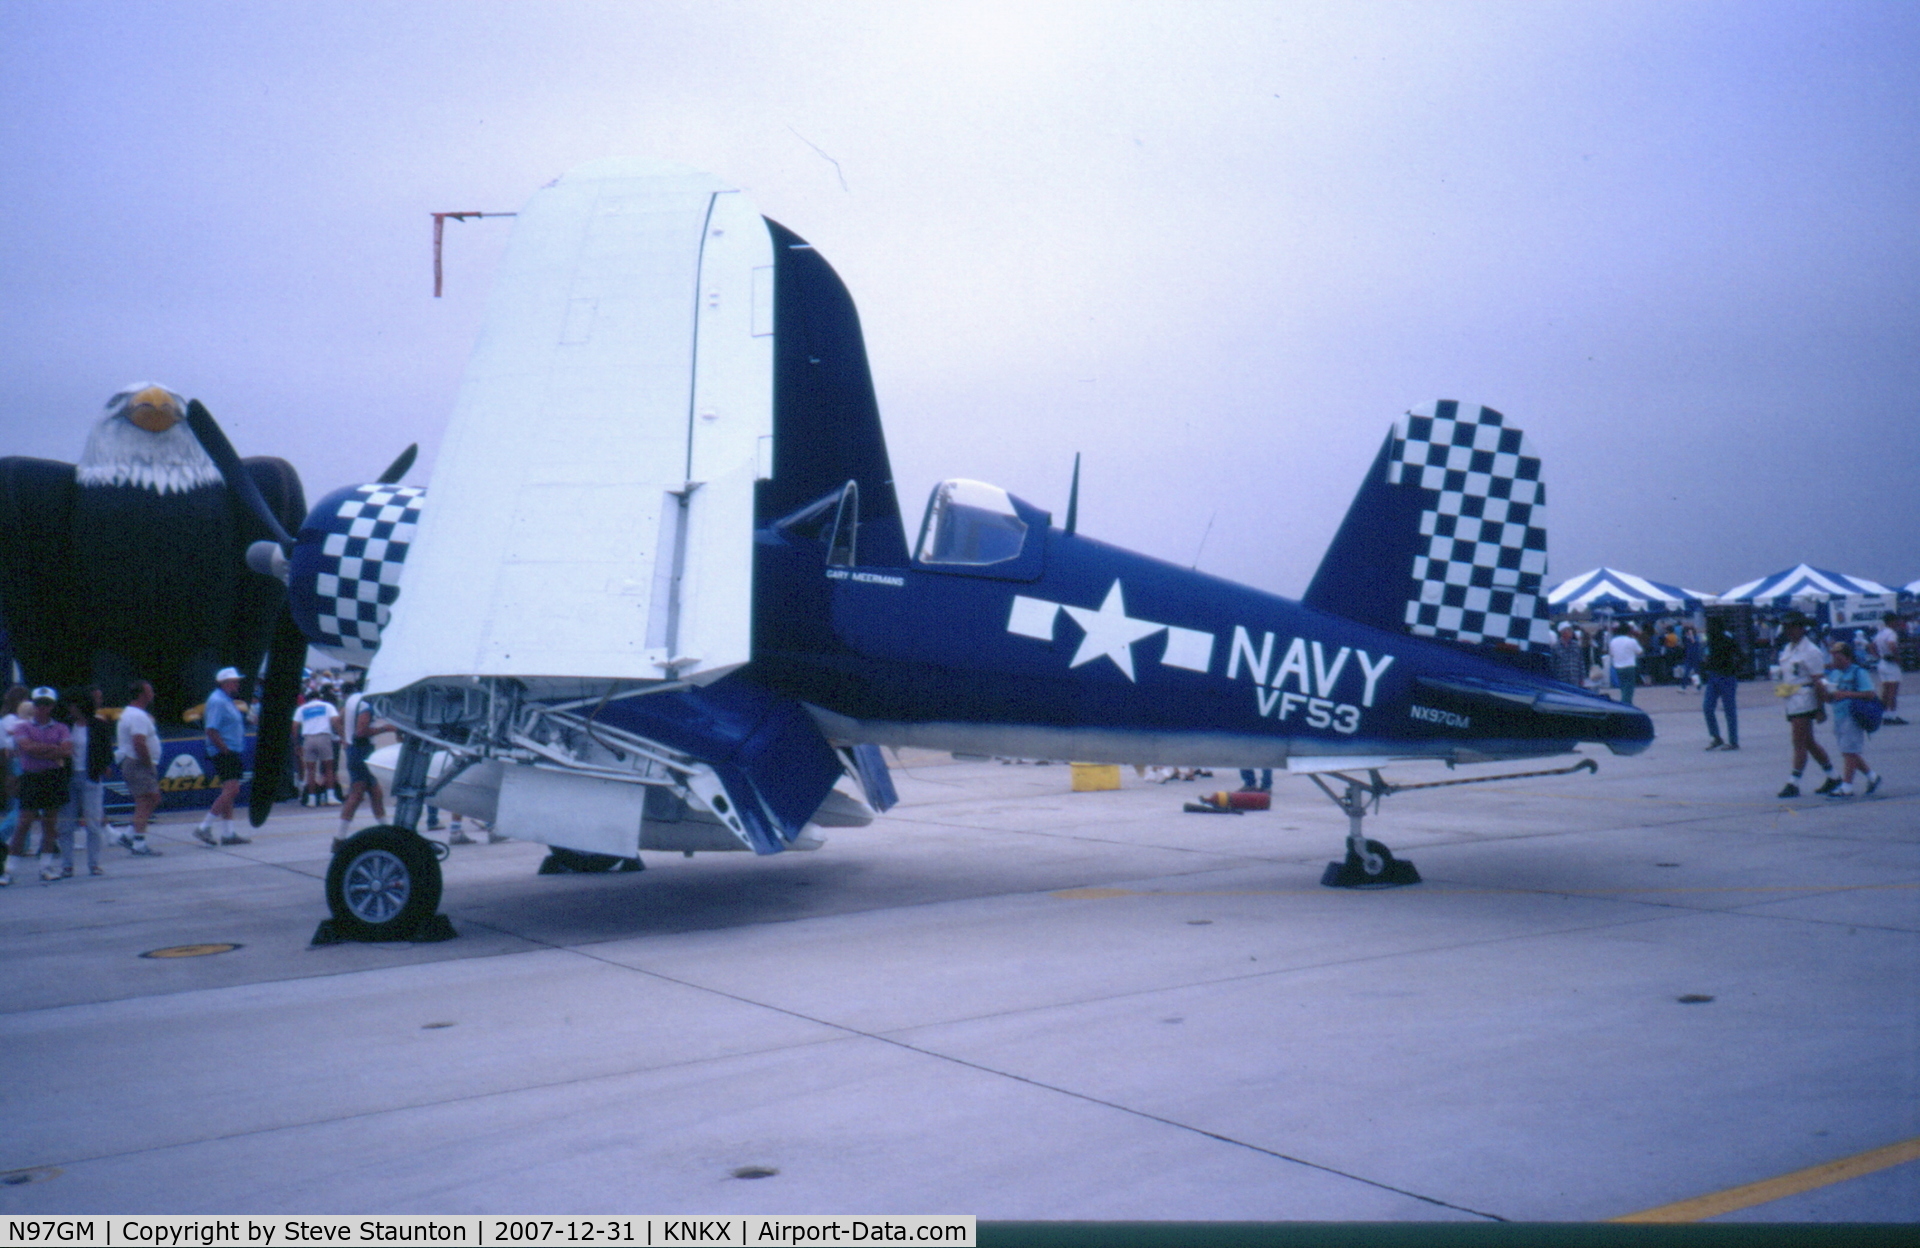 N97GM, 1943 Goodyear FG-1D Corsair C/N 67089, Taken at NAS Miramar Airshow in 1988 (scan of a slide)